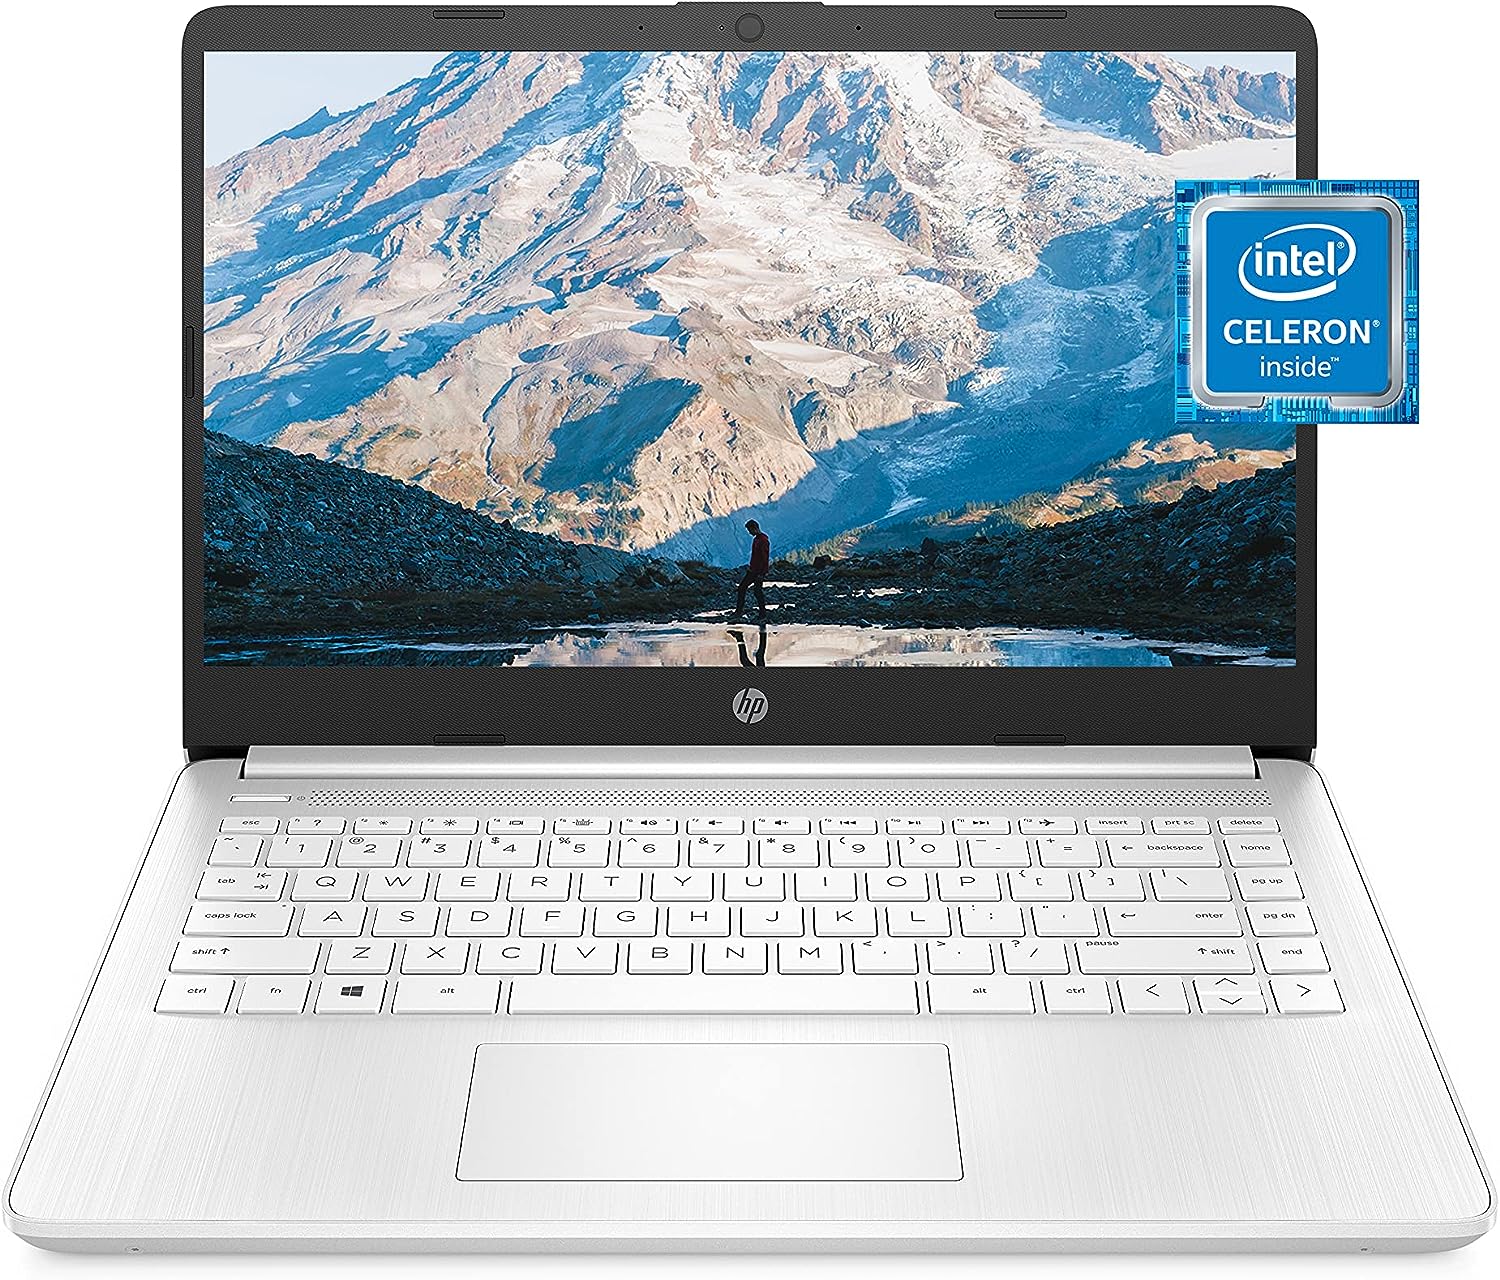 basic laptop detailed review